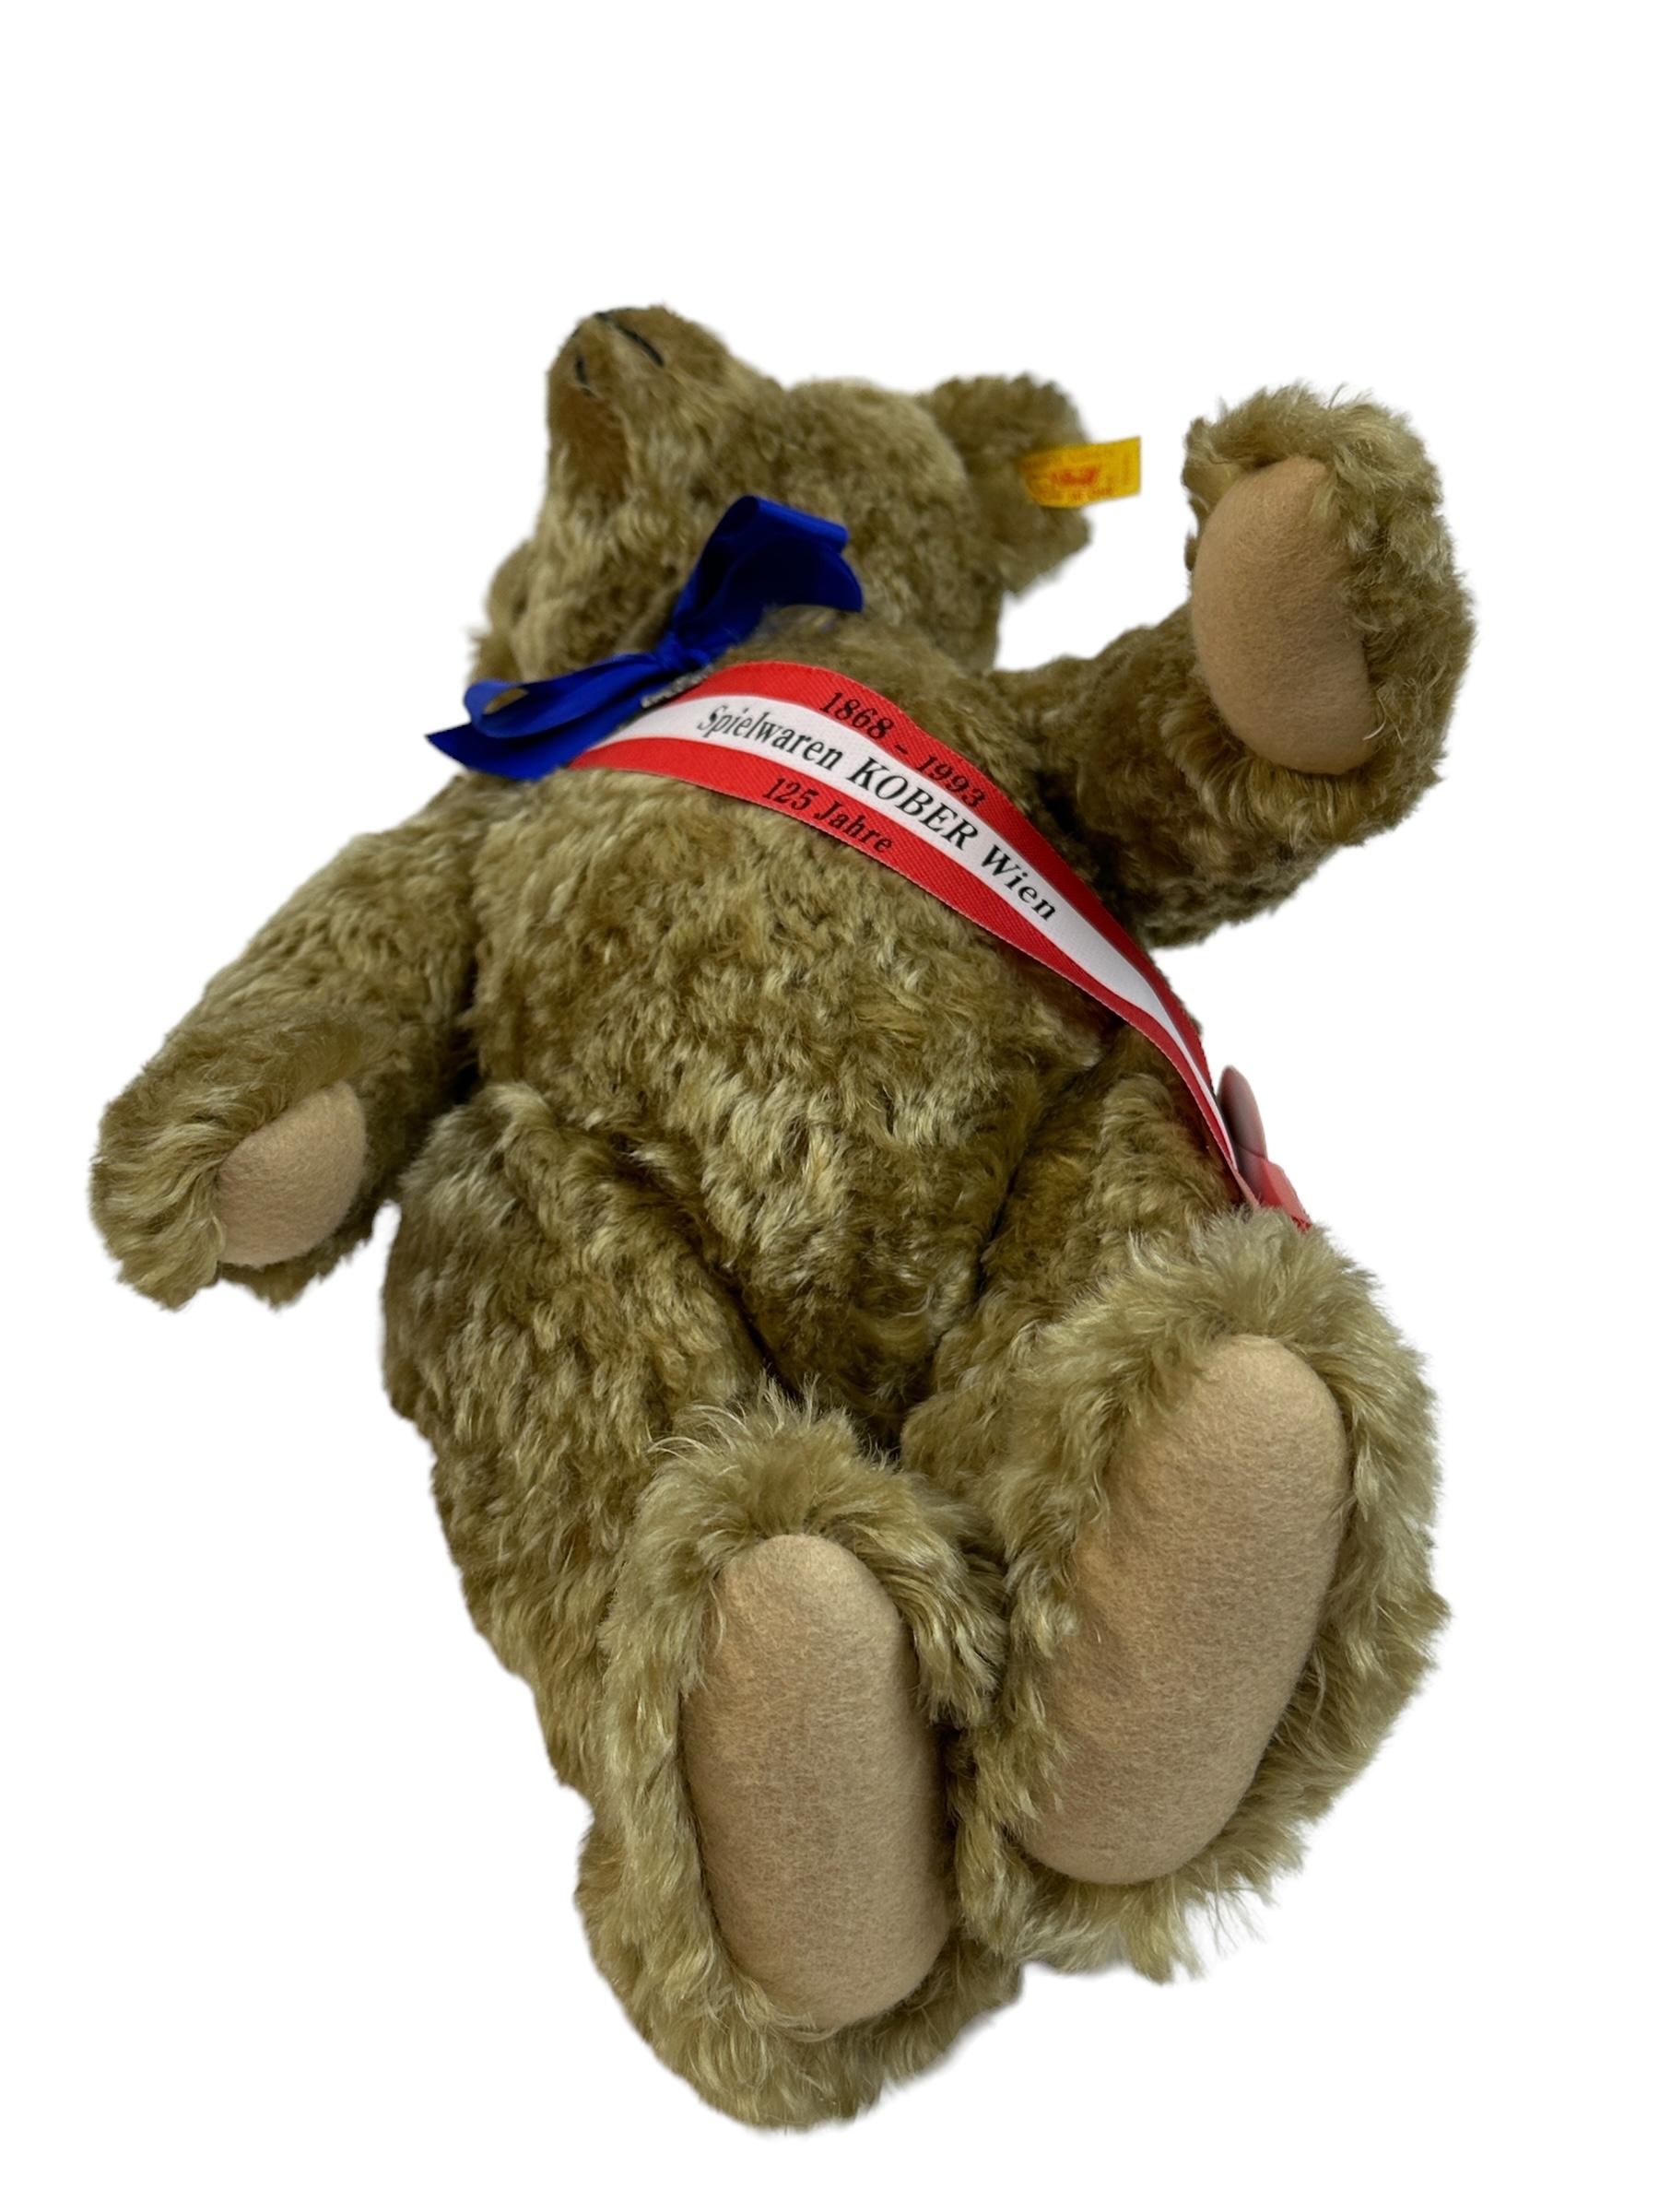 Steiff Collectible Teddy Bear Toy Store Kober Vienna exclusive, Vintage Austria For Sale 5